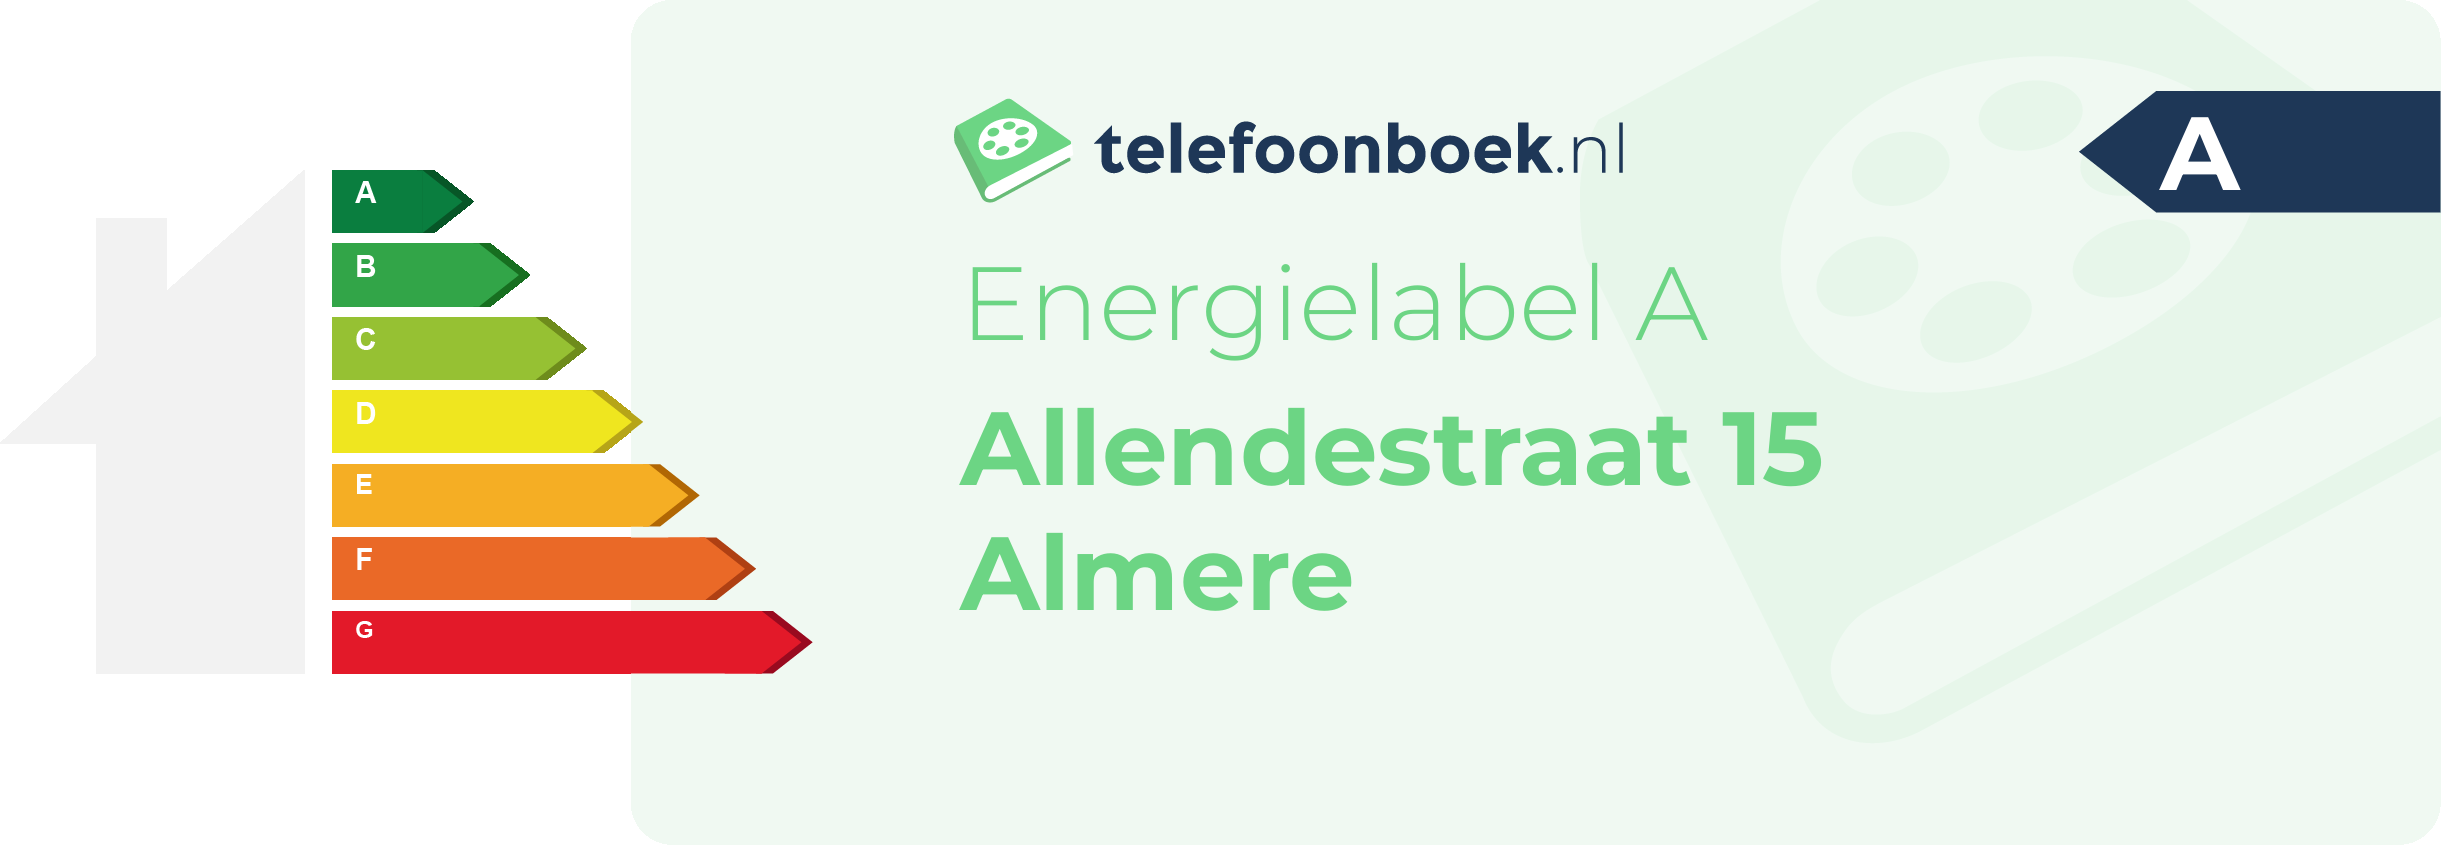 Energielabel Allendestraat 15 Almere